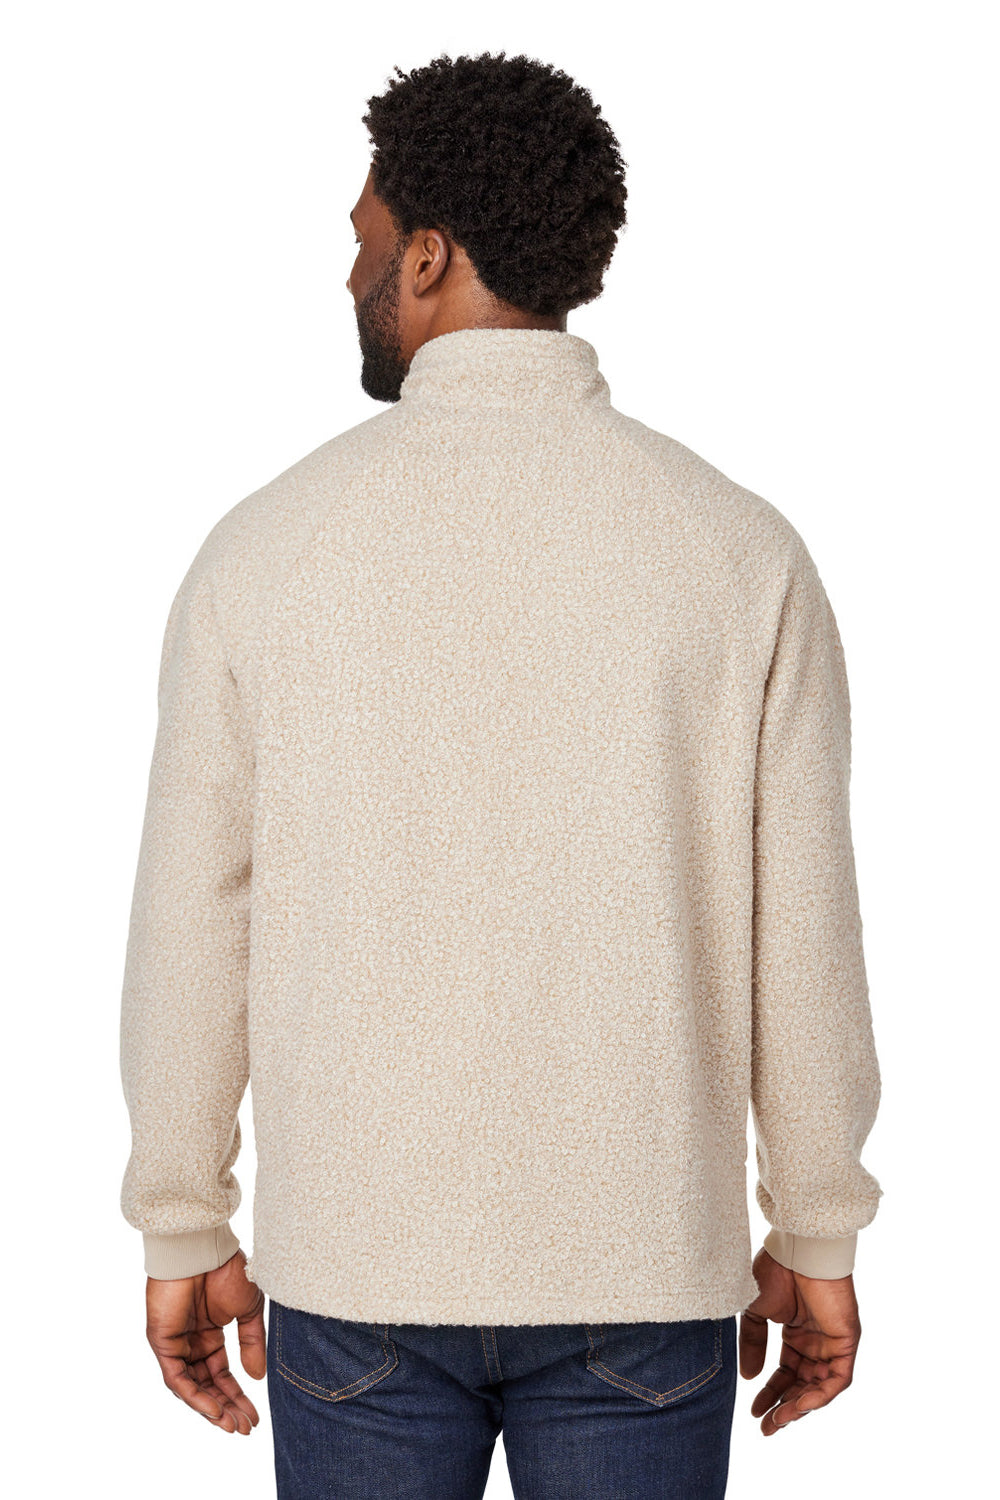 North End NE713 Mens Aura Sweater Fleece 1/4 Zip Sweatshirt Heather Oatmeal/Teak Back